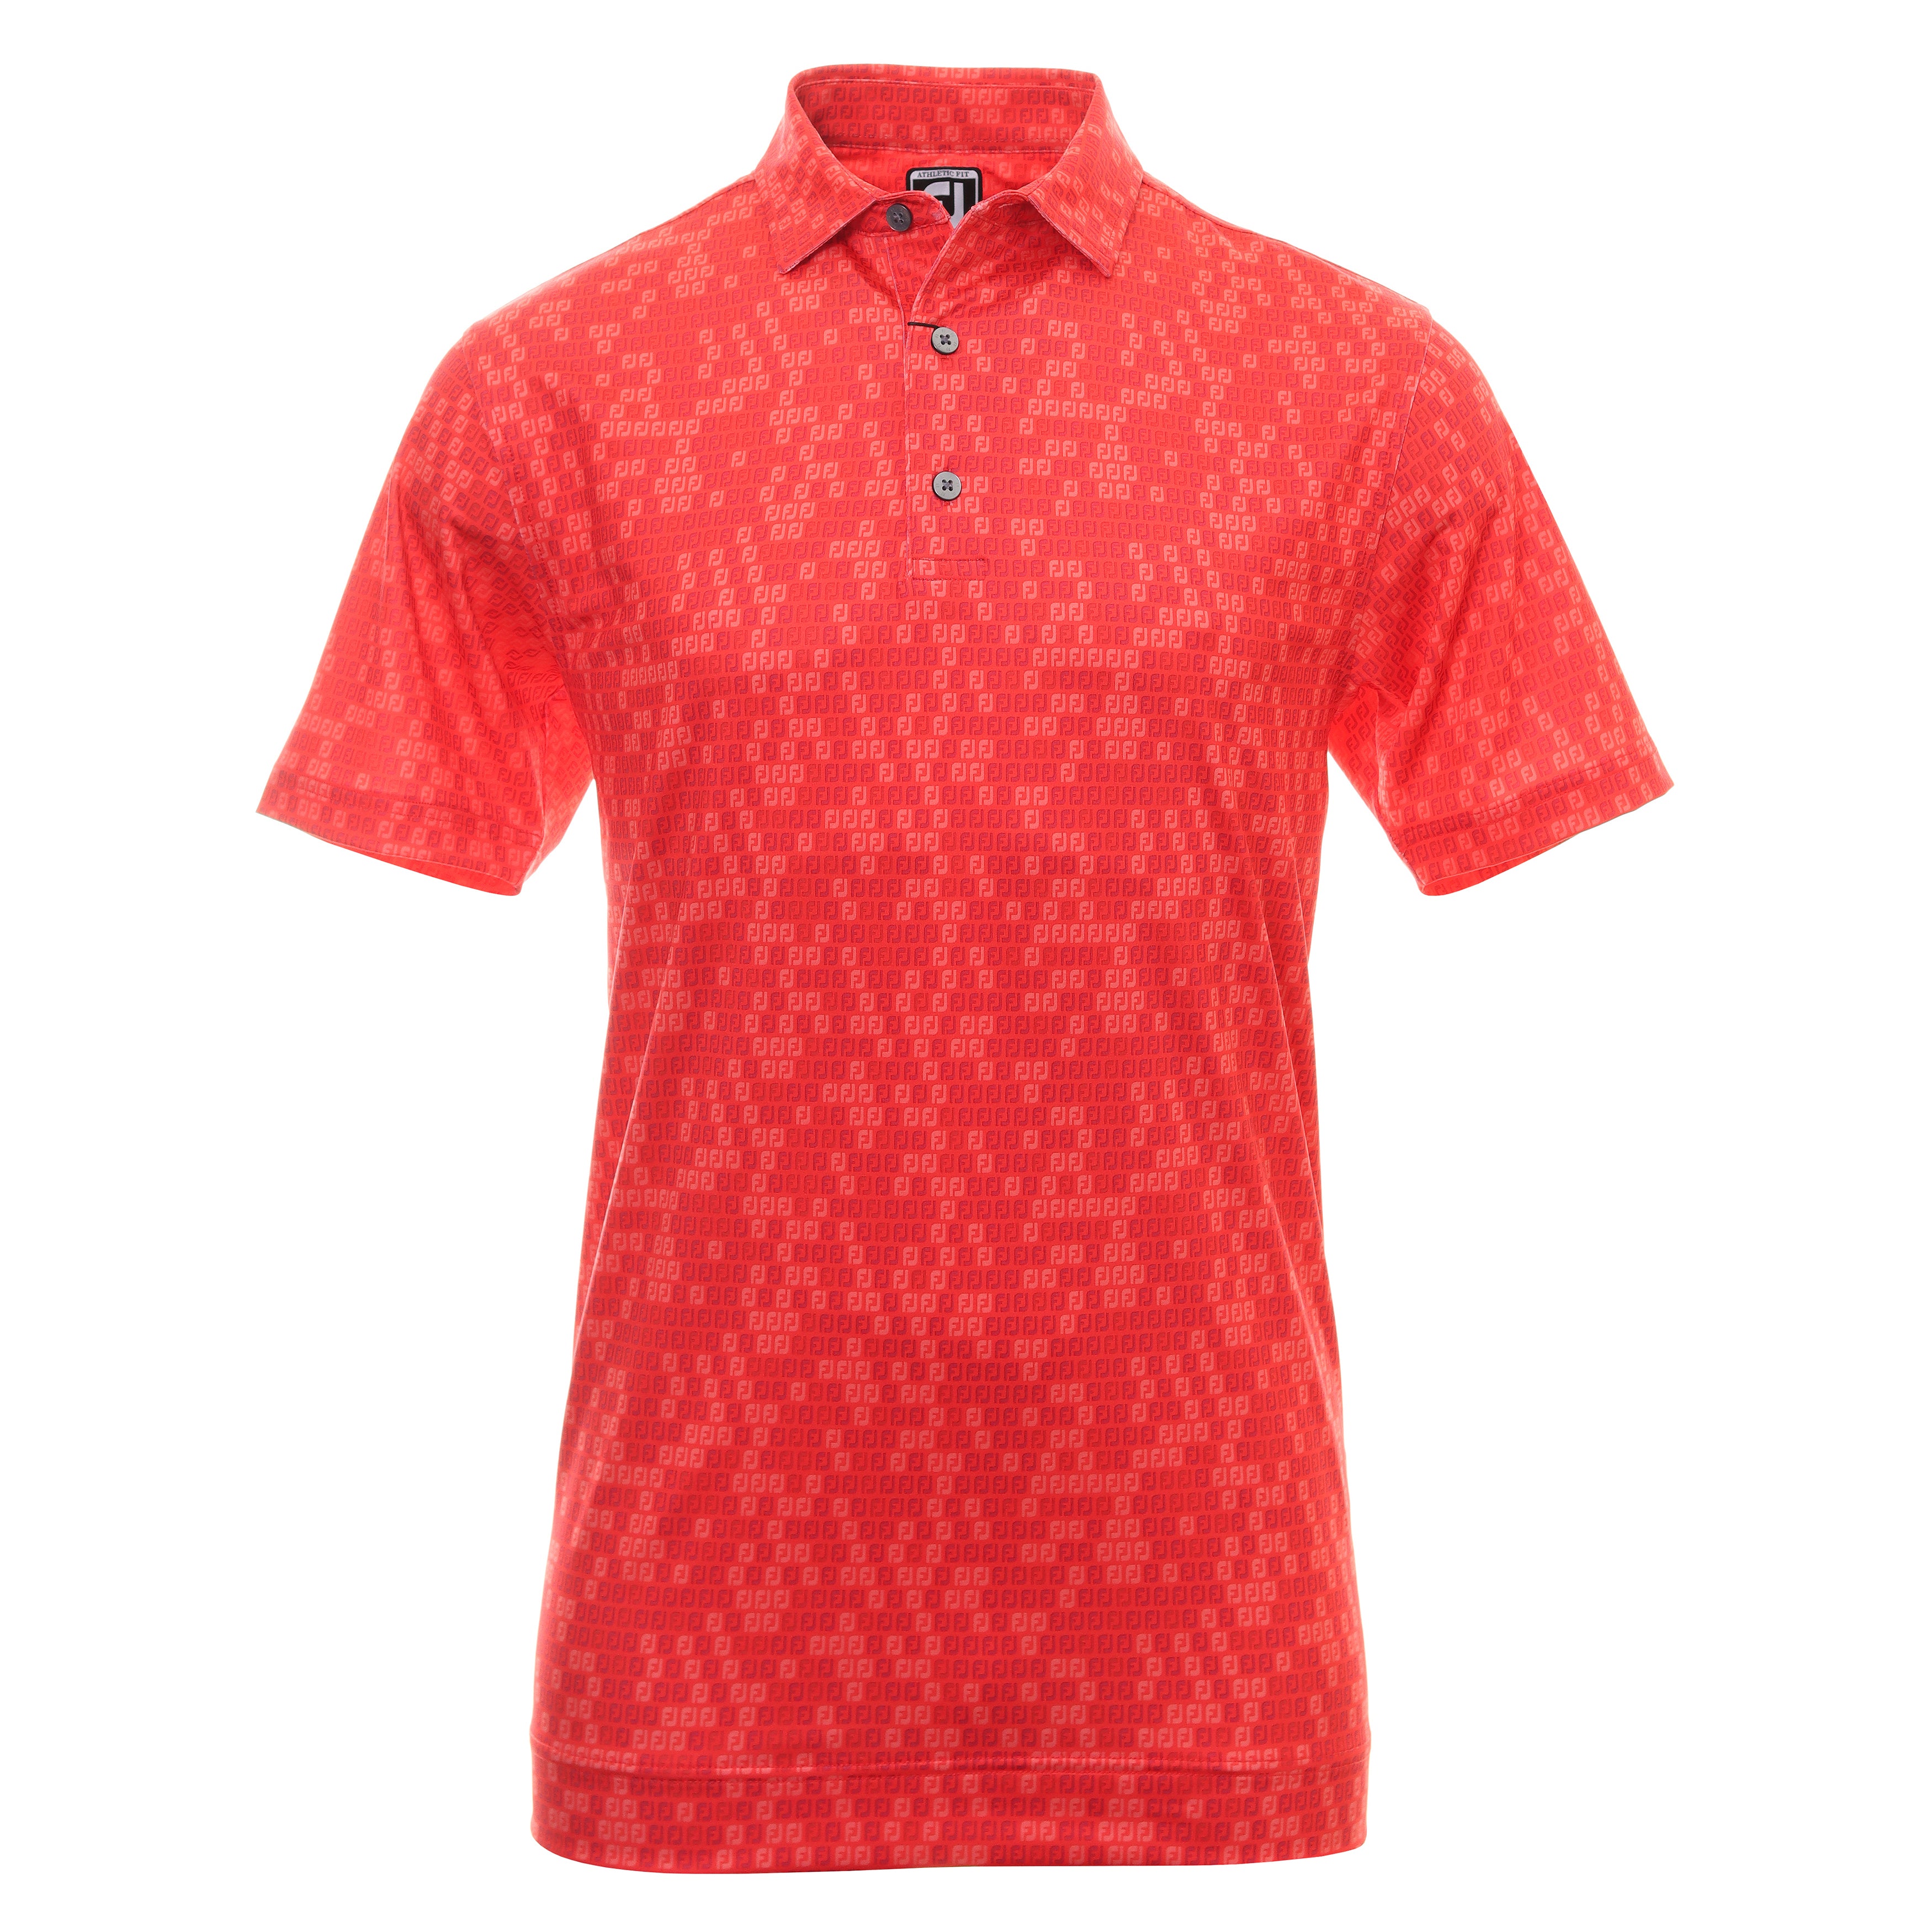 FootJoy Digital Camo FJ Print Golf Shirt 88439 Red | Function18 ...